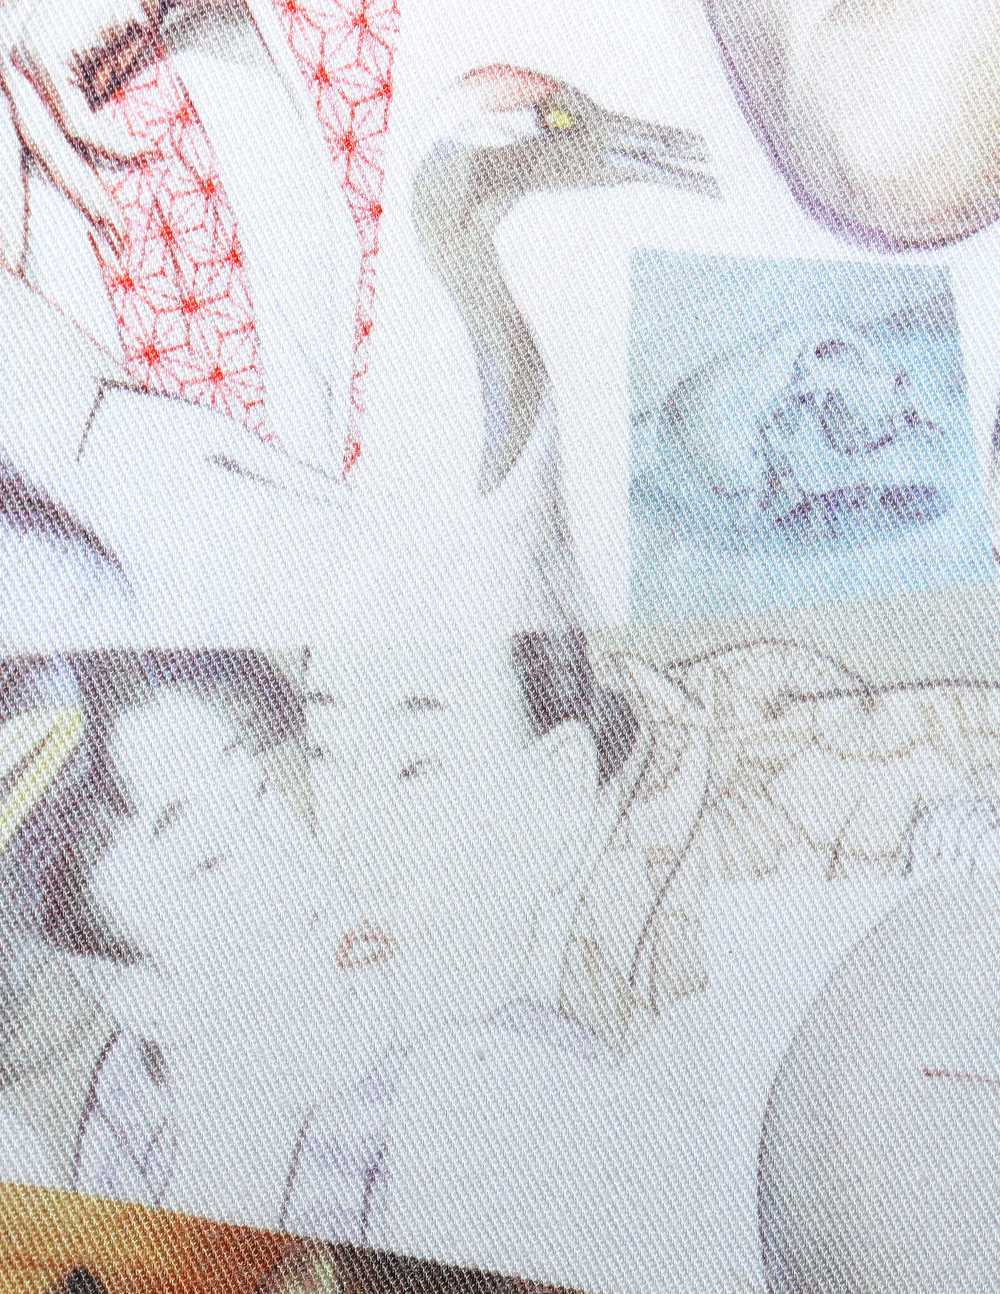 X-Large Sorayama 'Erotica' Rayon Shirt - image 9